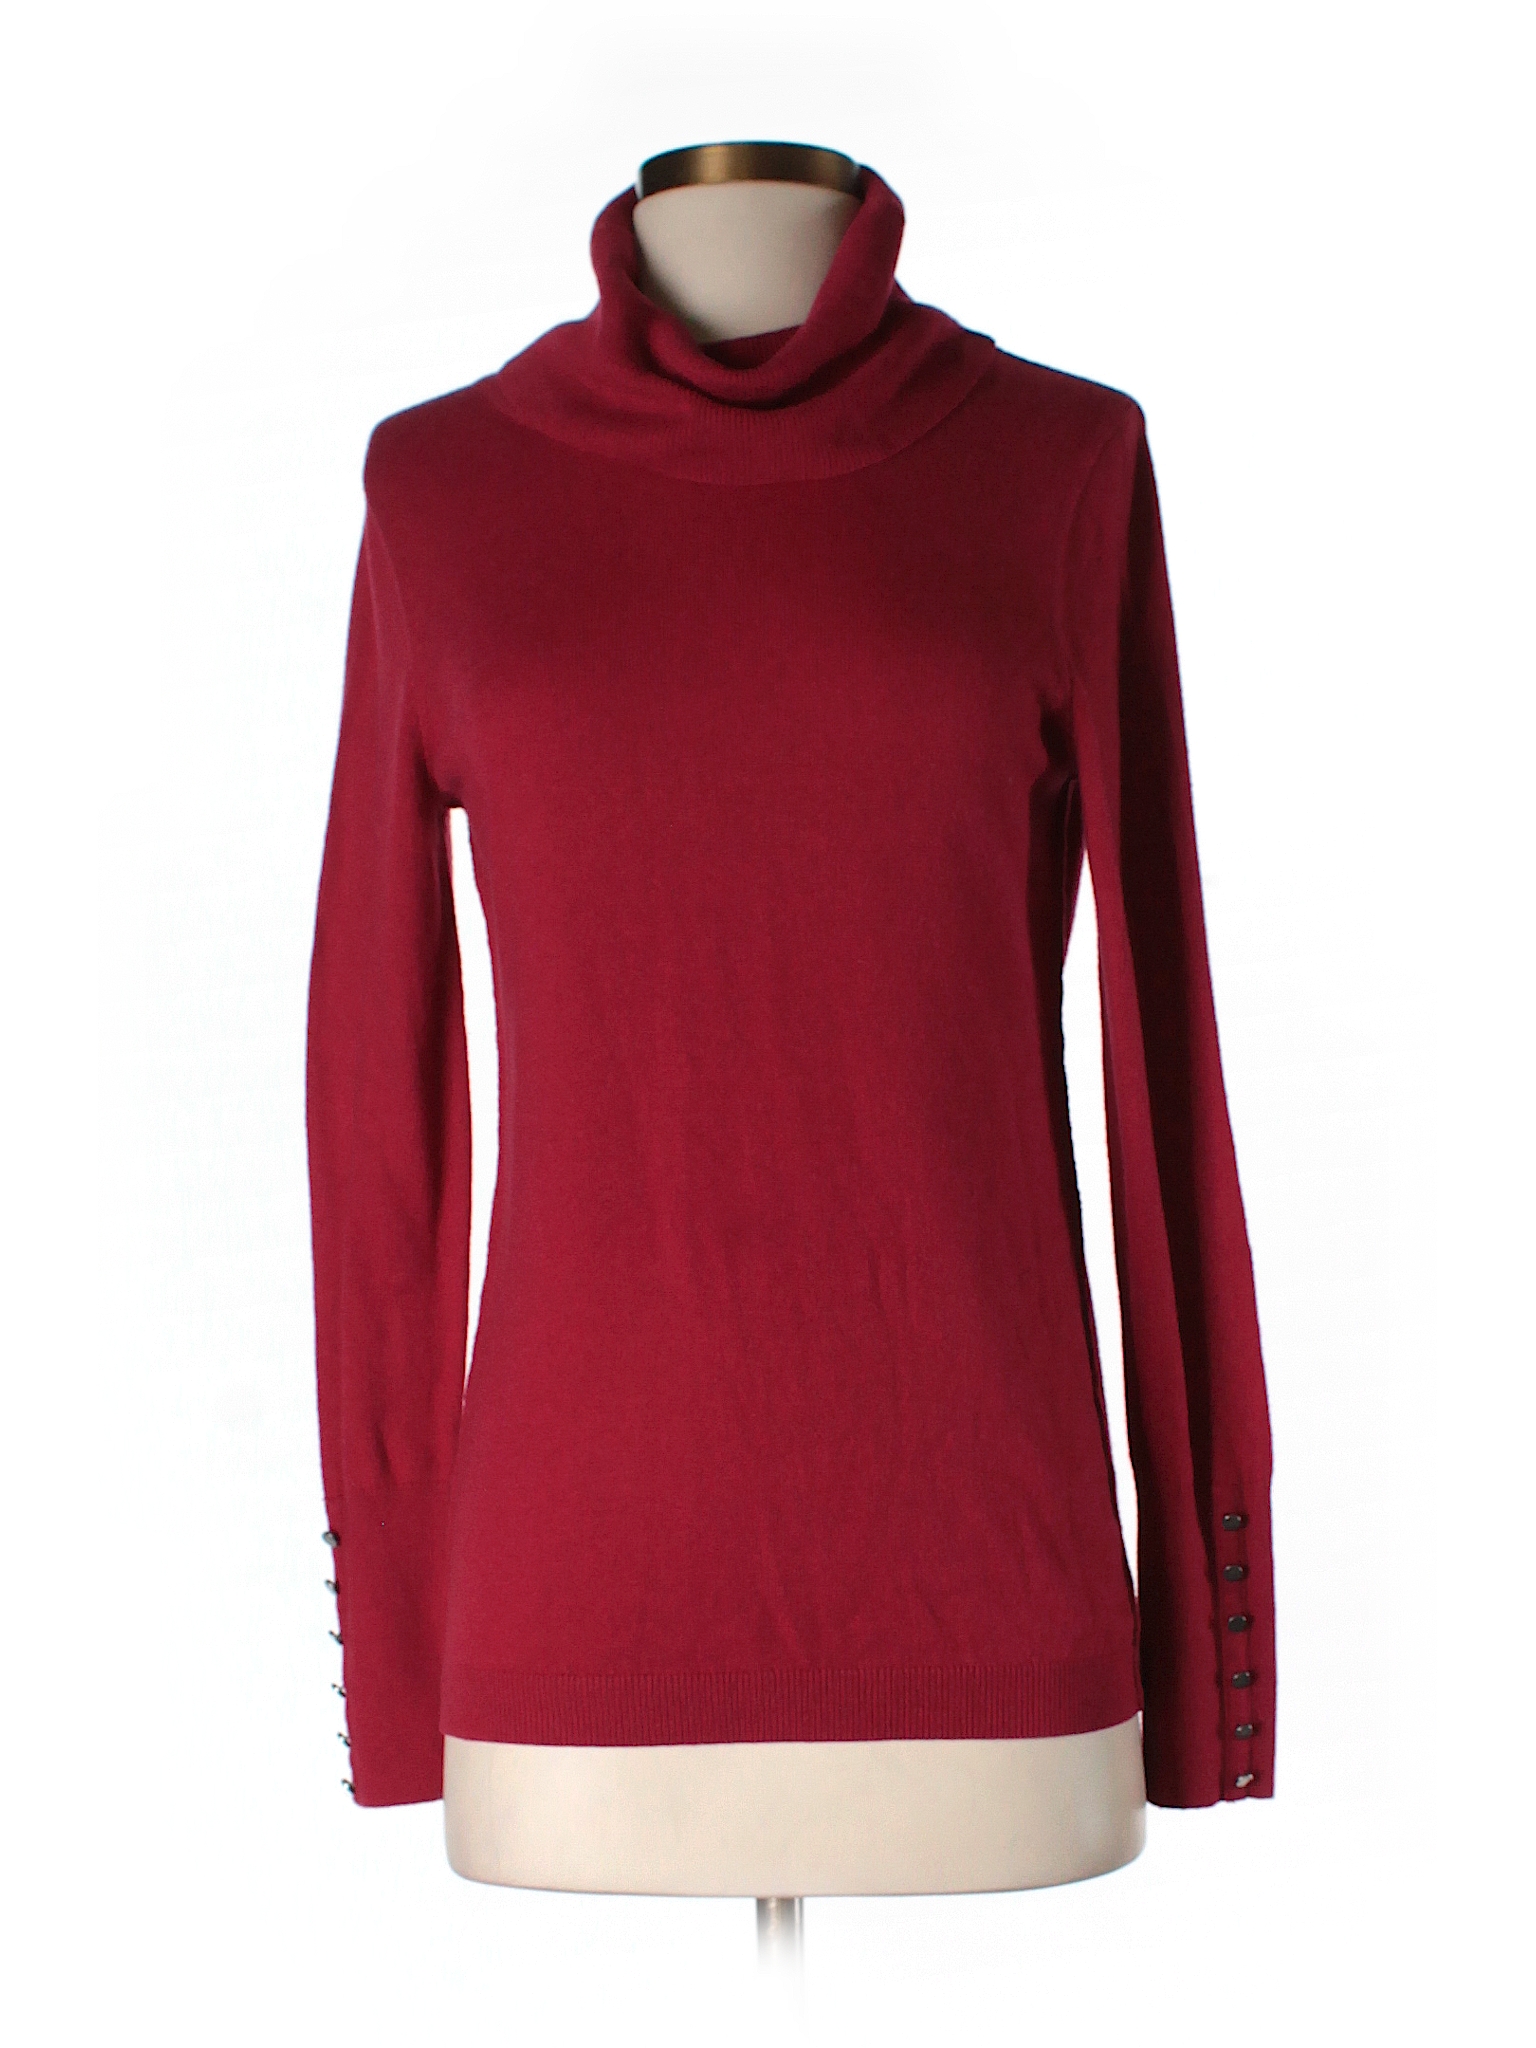 Ann Taylor LOFT Solid Red Turtleneck Sweater Size S - 75% off | thredUP